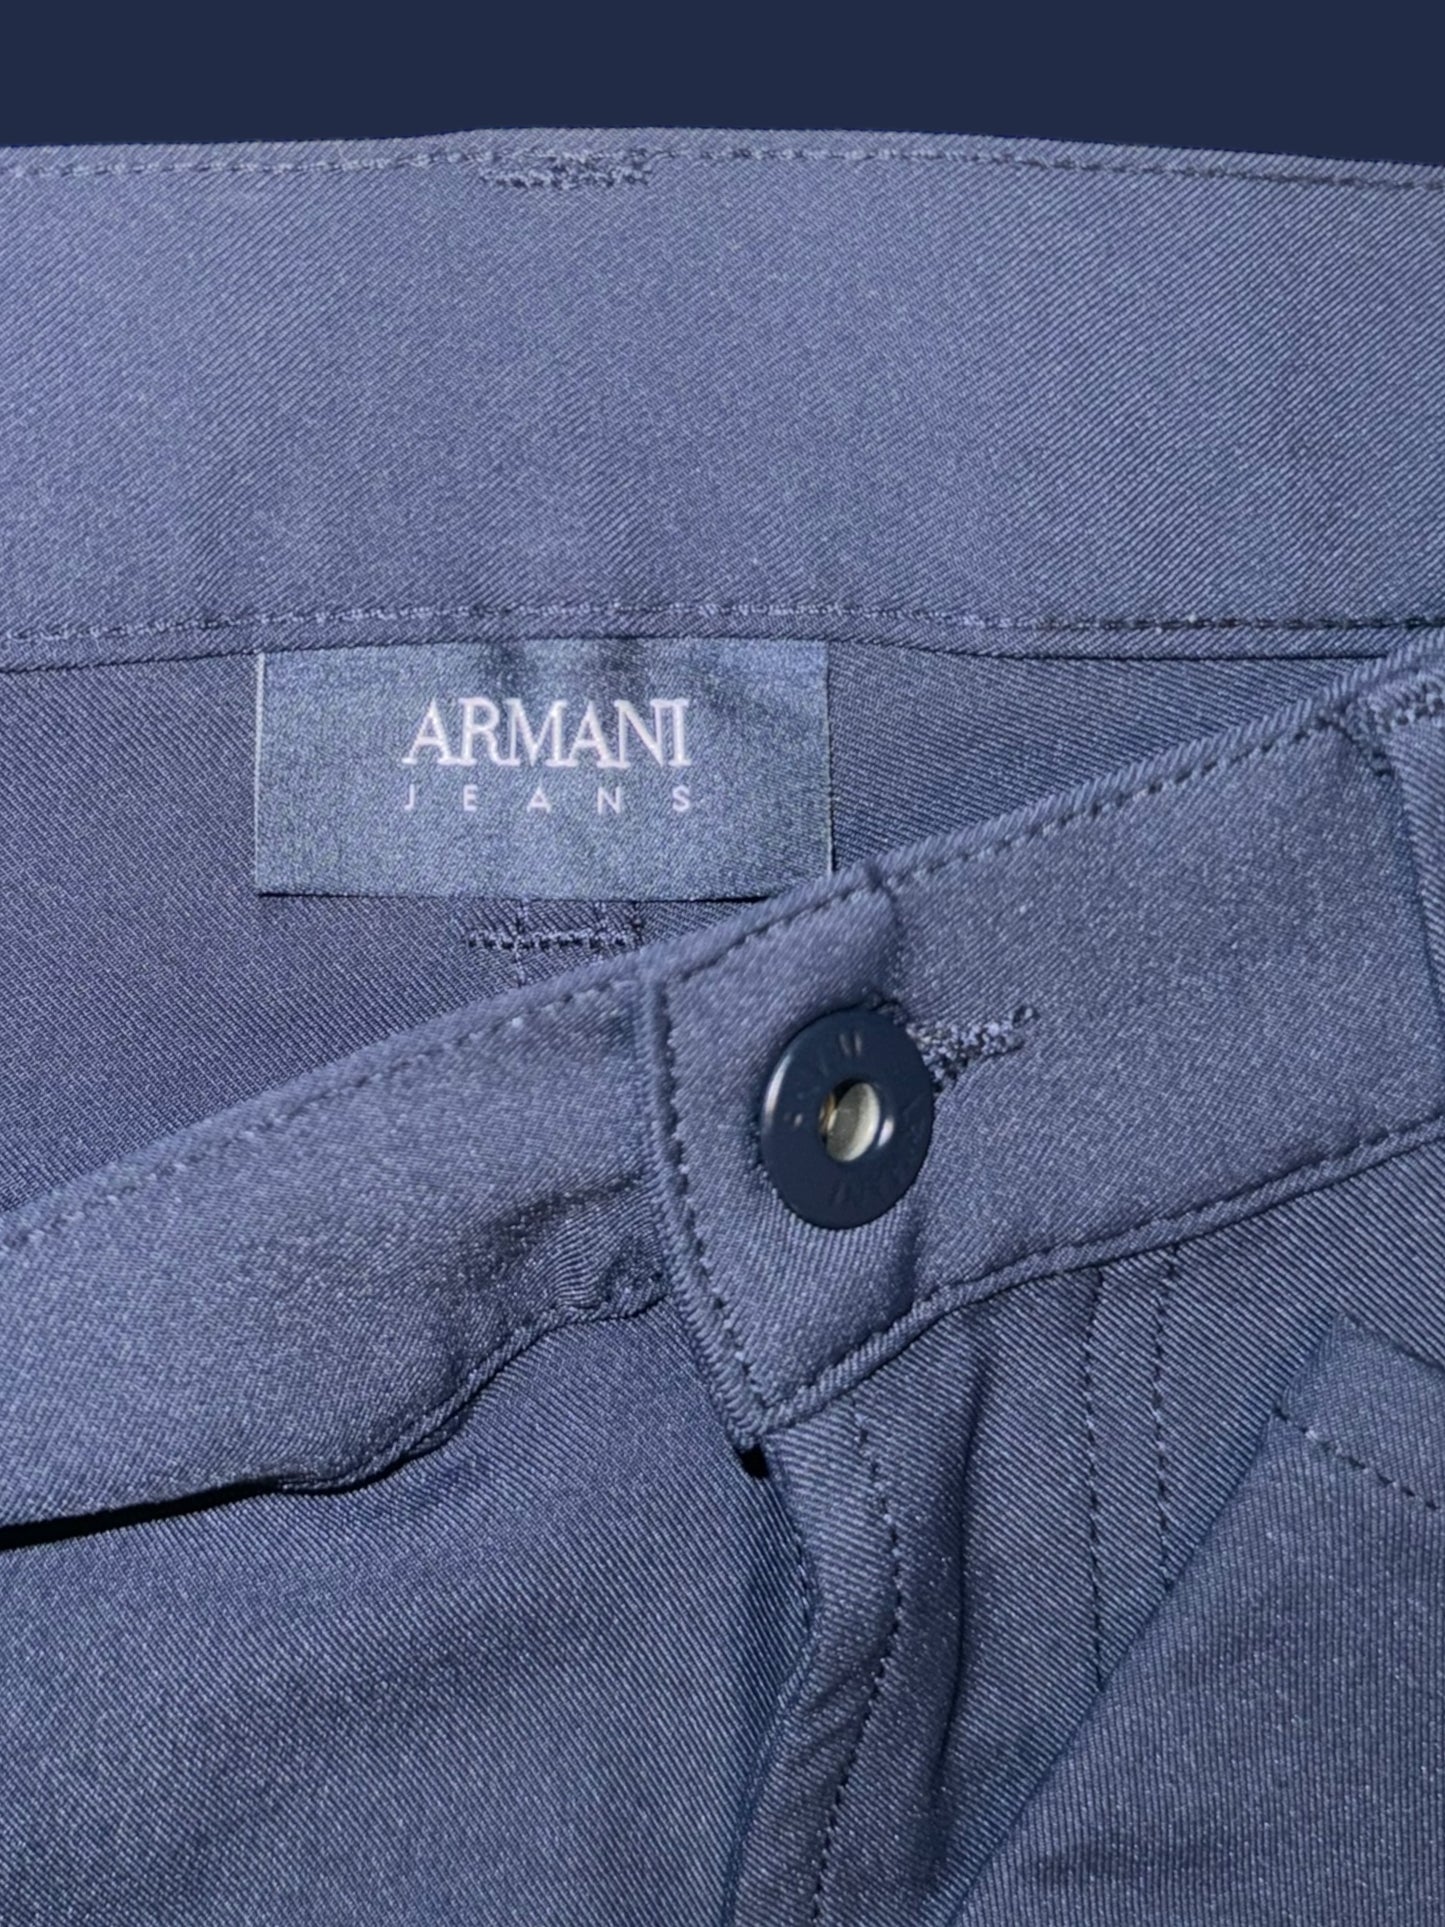 mens ARMANI blue pants size small